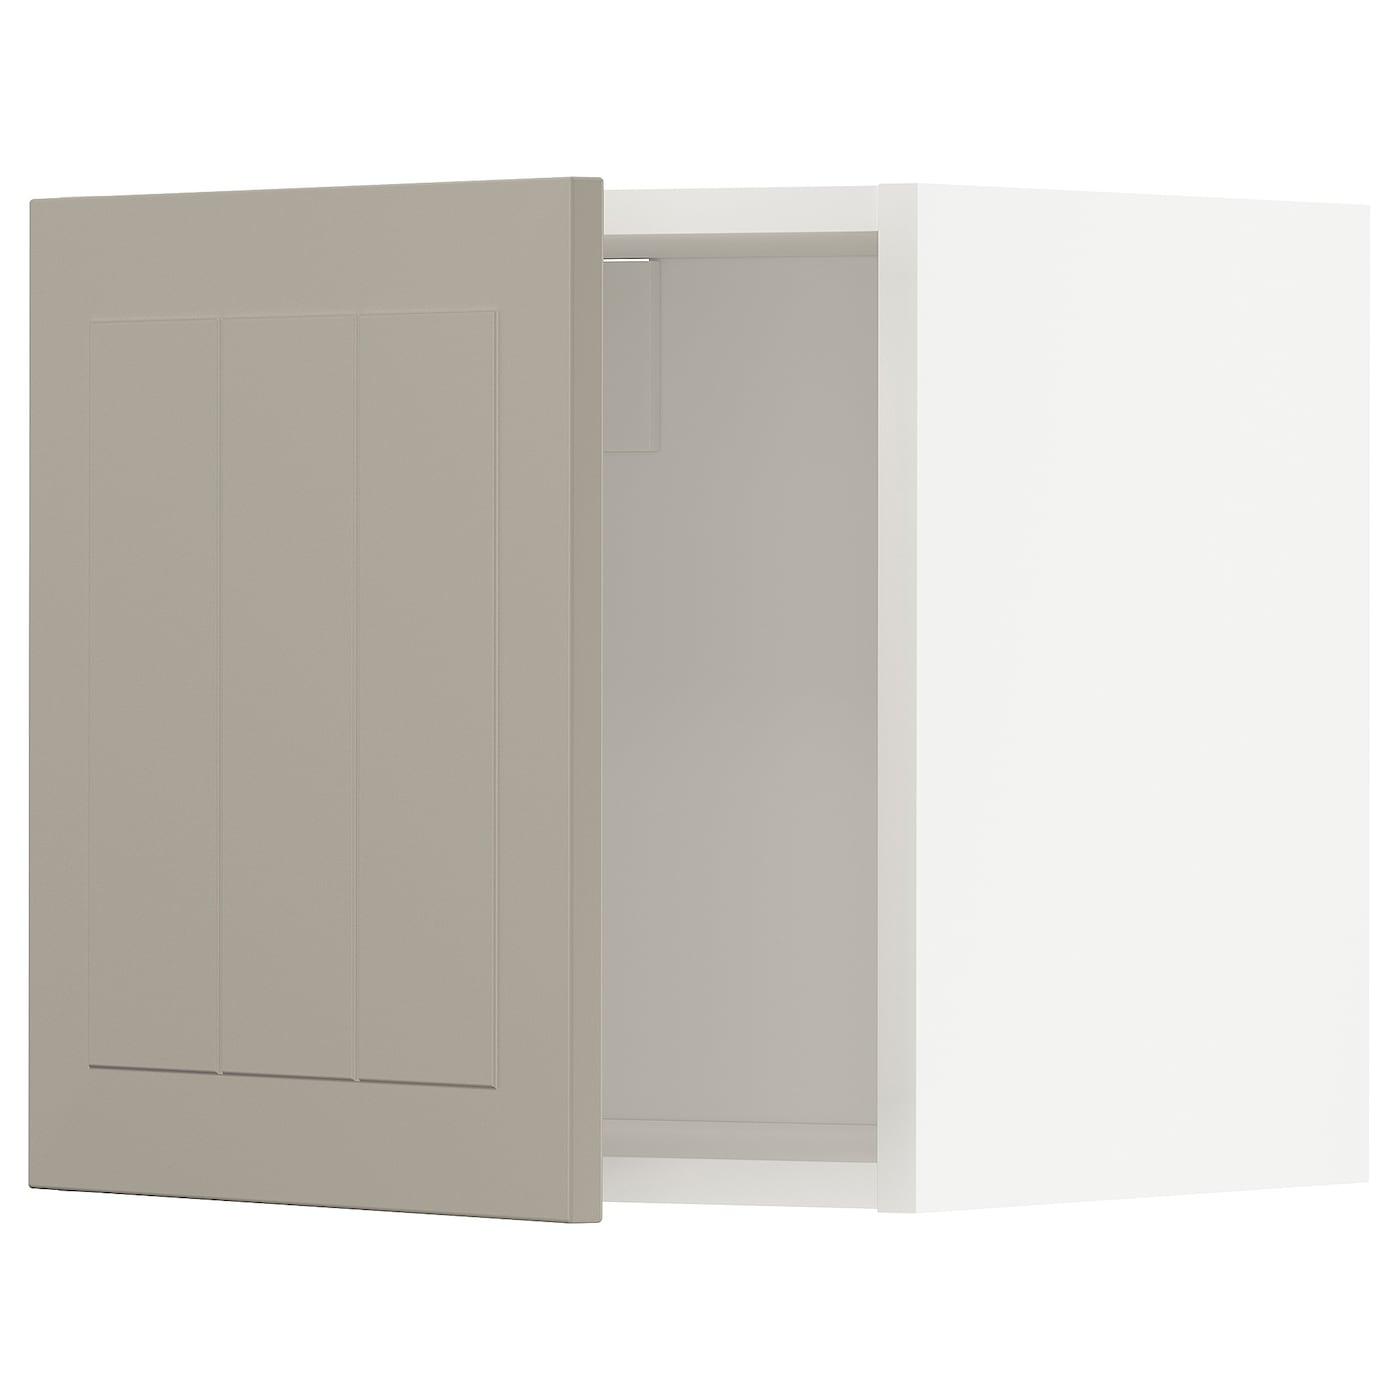 METOD Навесной шкаф - METOD IKEA/ МЕТОД ИКЕА, 40х40 см, белый/светло-коричневый